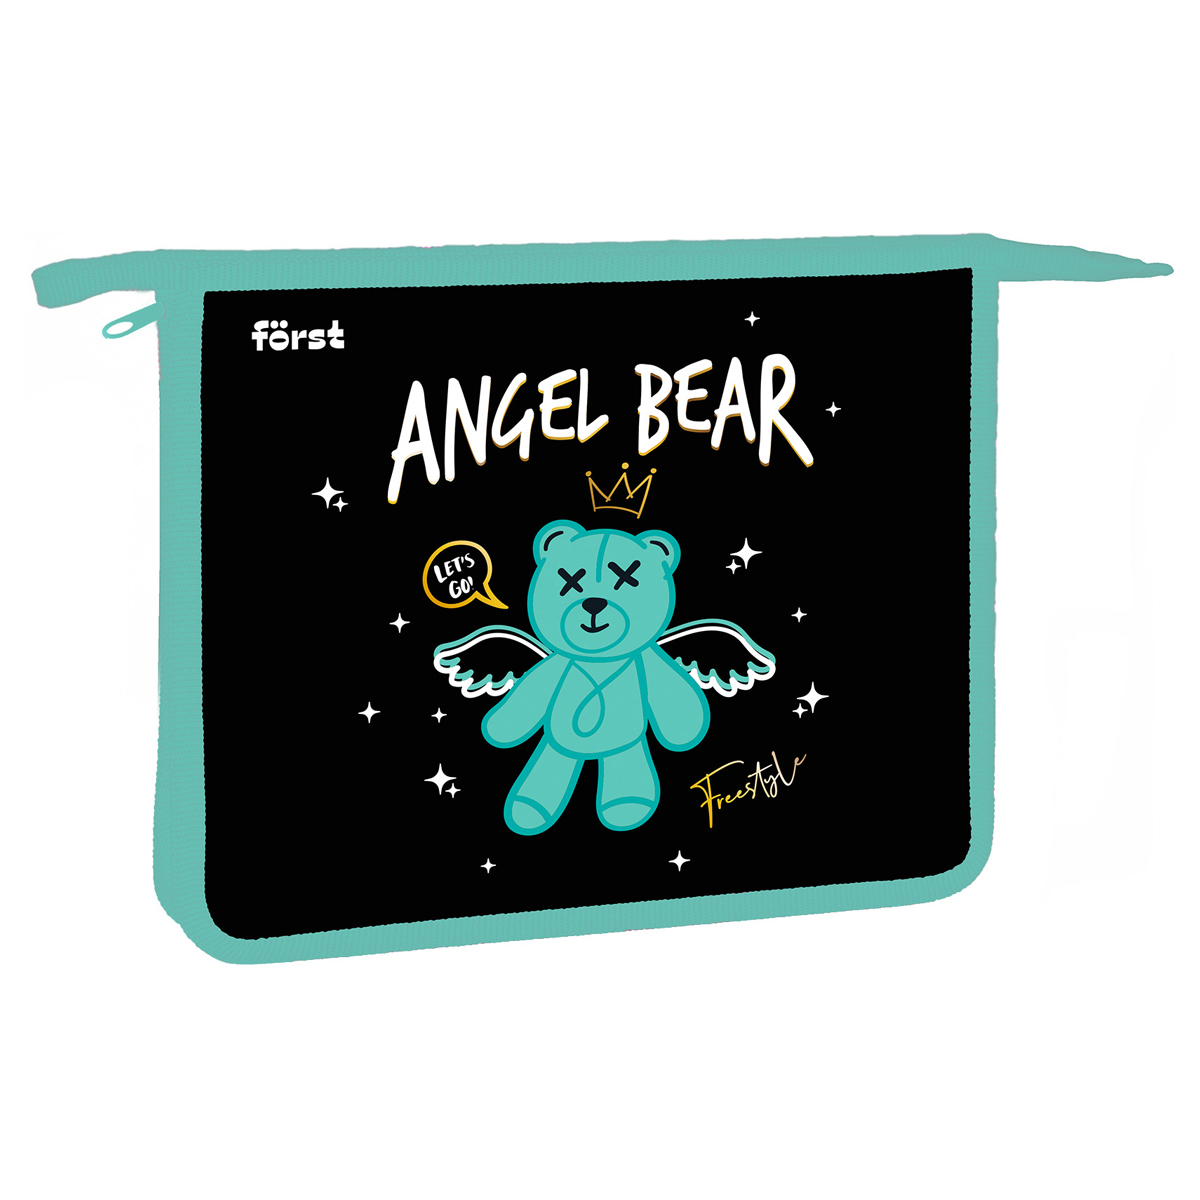    1 , 5 Frst "Angel bear", 240*205*40, ,   